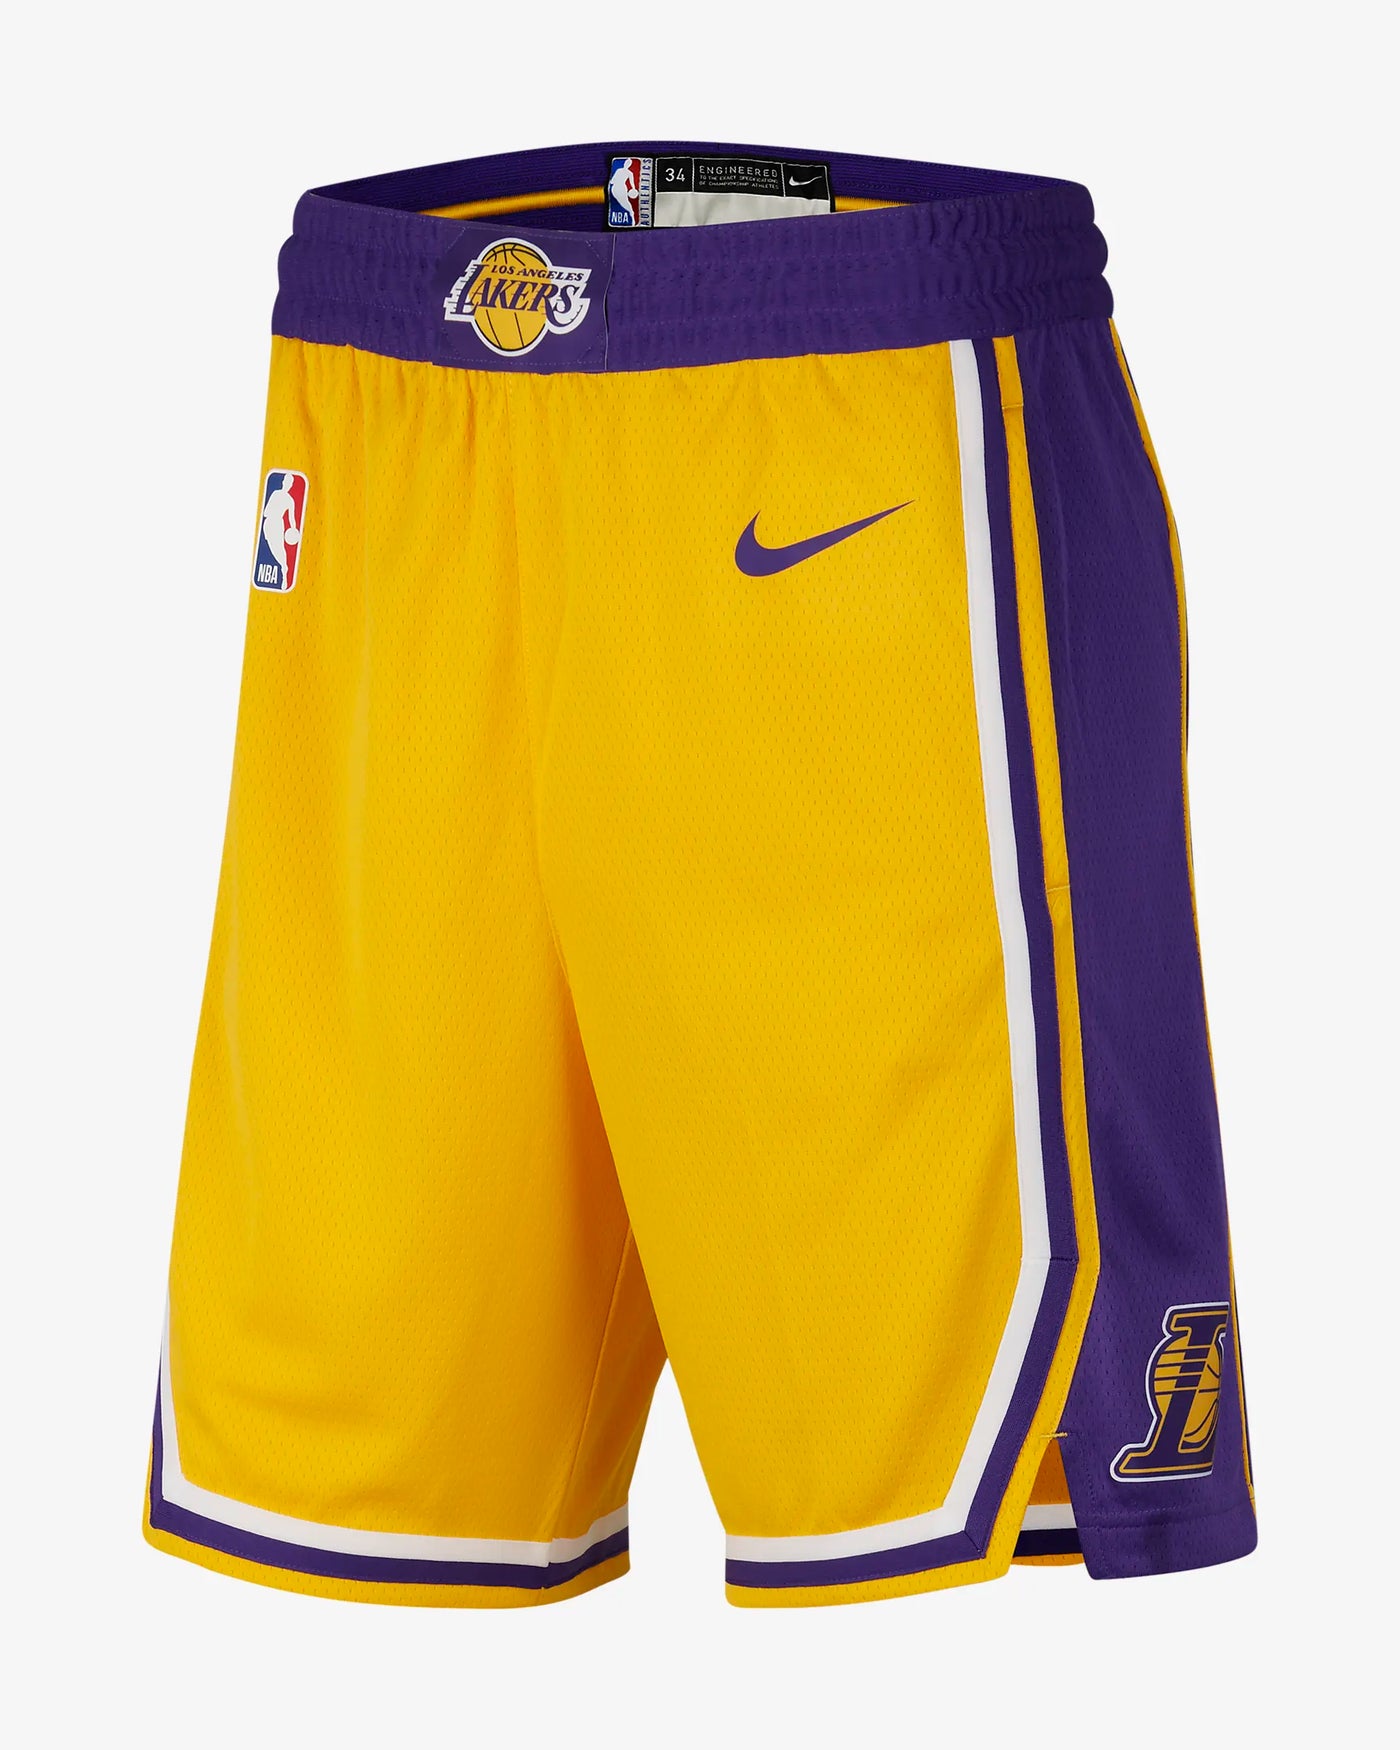 Shorts der Los Angeles Lakers